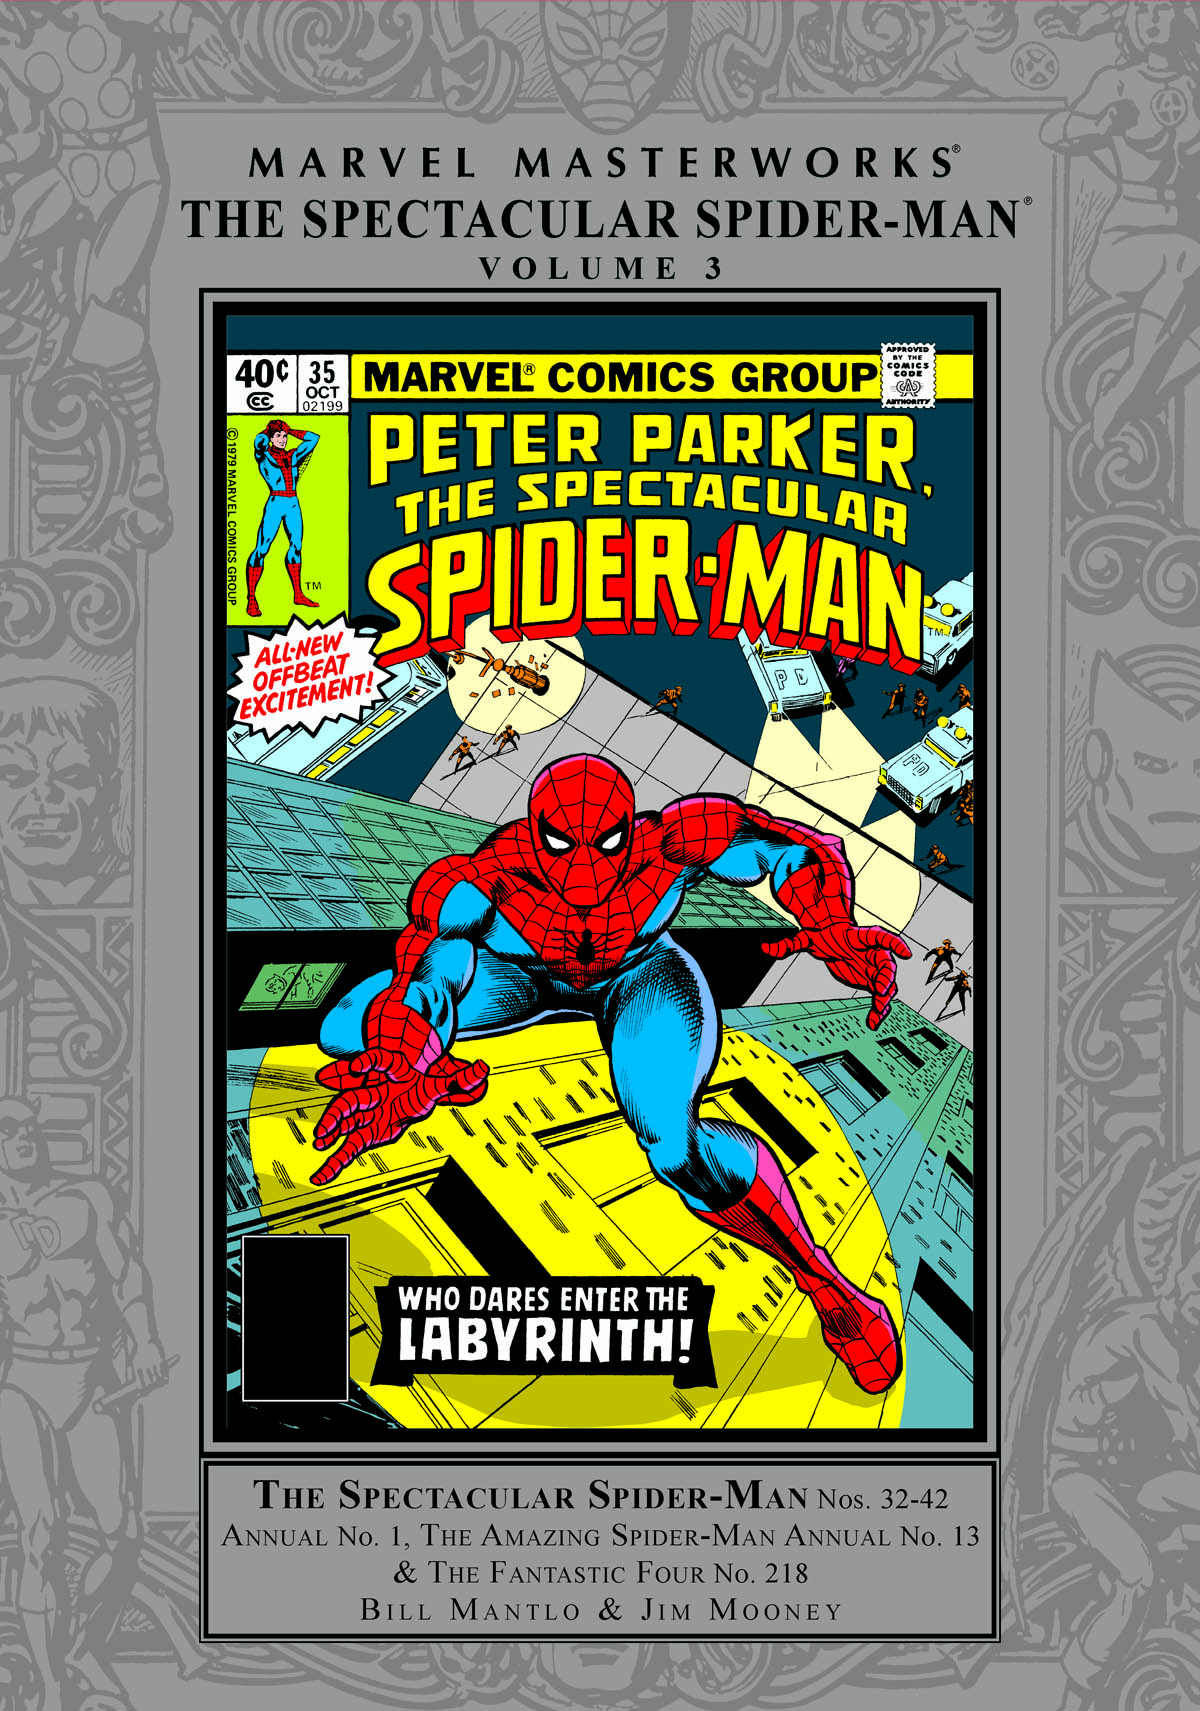 MARVEL MASTERWORKS: THE SPECTACULAR SPIDER-MAN VOL. 3 HC (Trade Paperback)